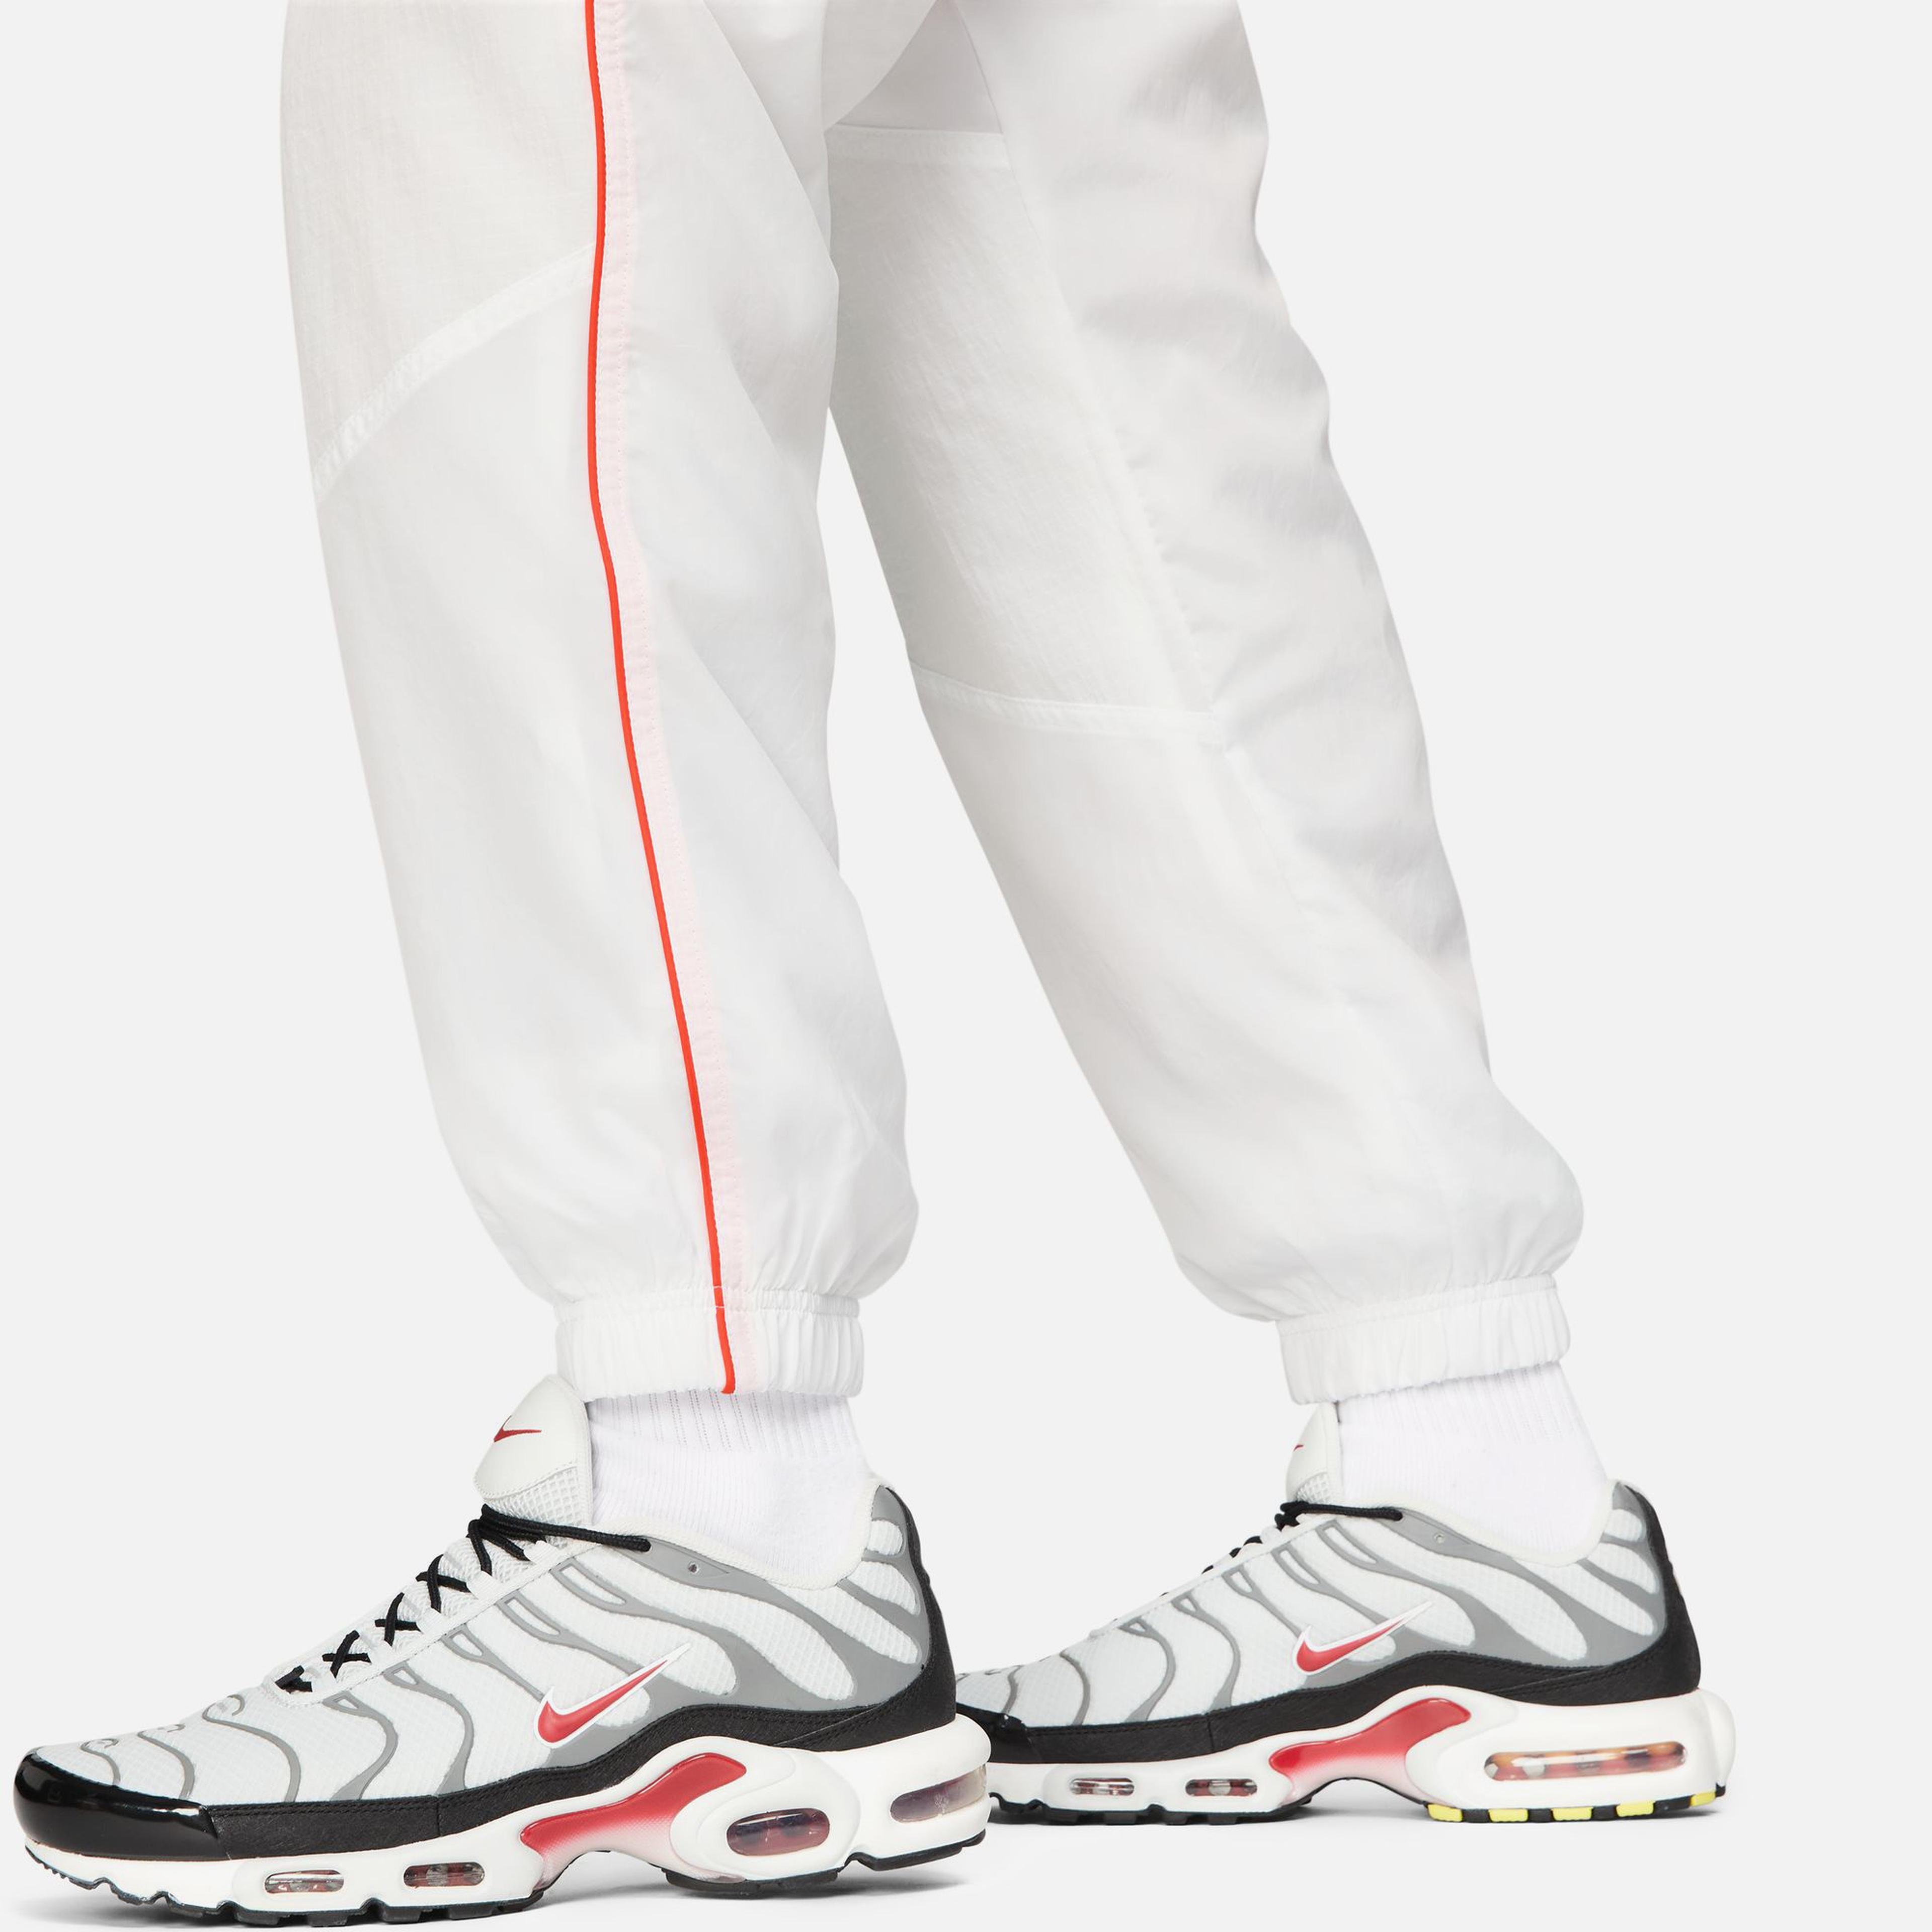 Nike Sportswear Swoosh Air Woven Erkek Beyaz Eşofman Altı